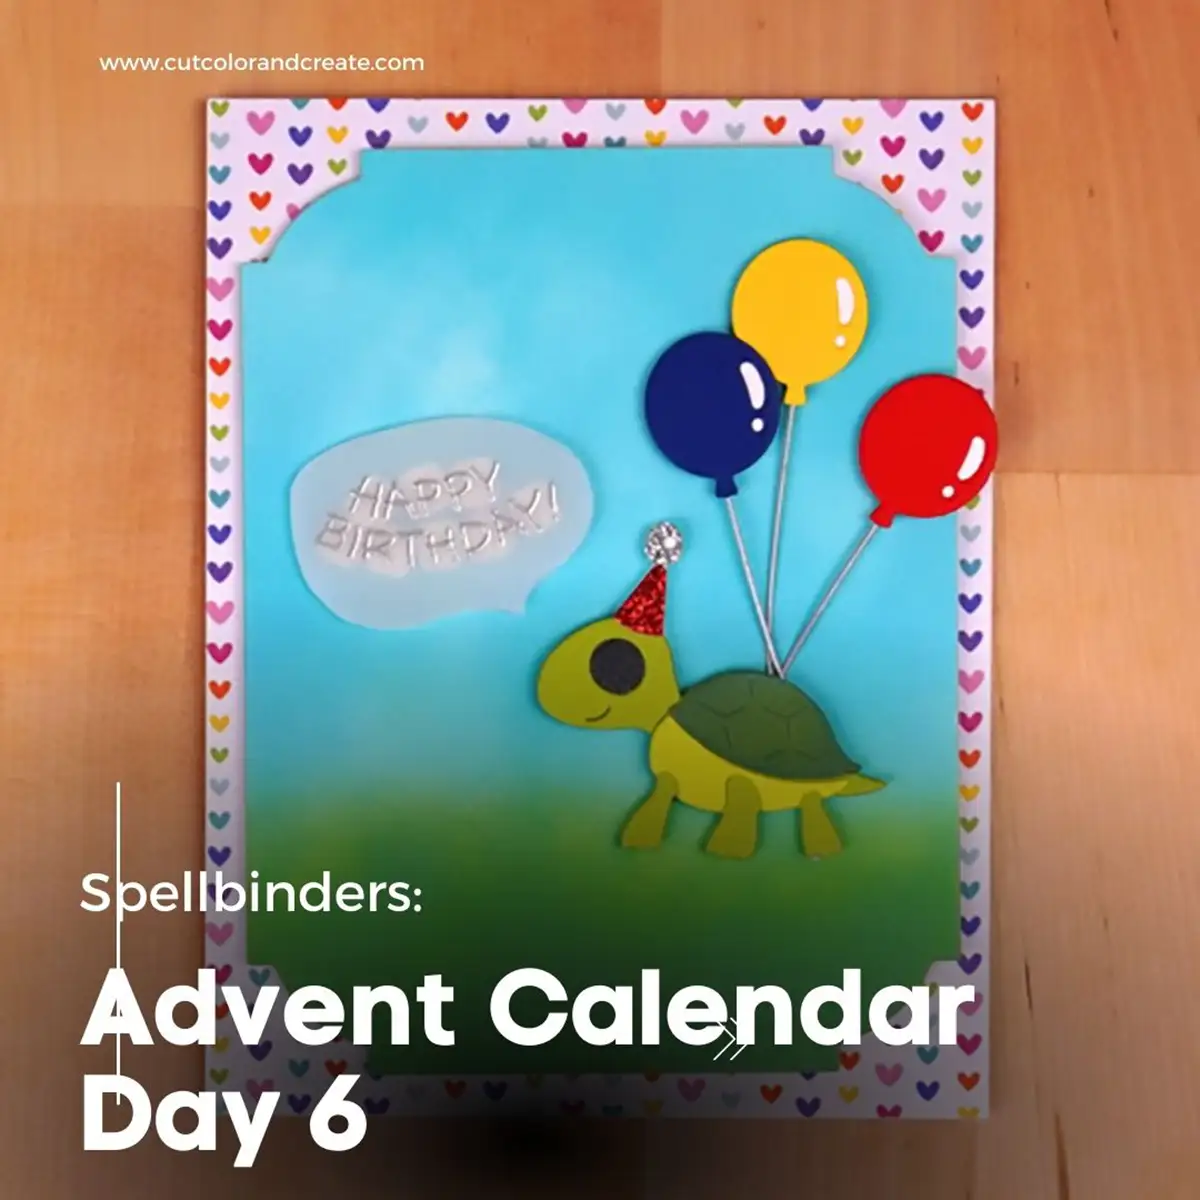 Spellbinders advent calendar day 6. - Turtle card